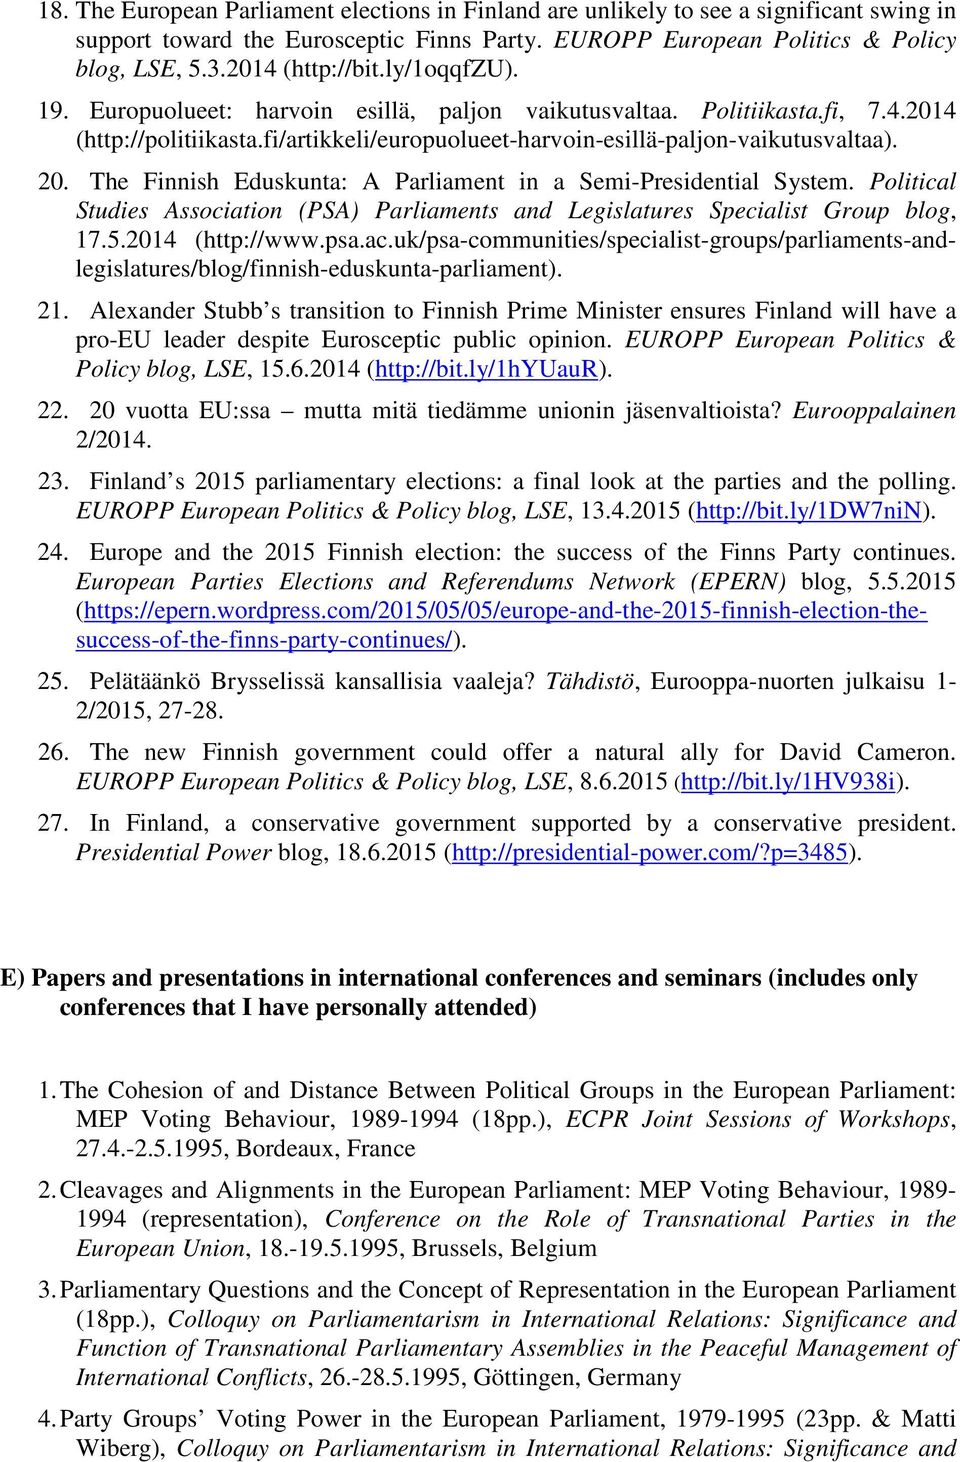 20. The Finnish Eduskunta: A Parliament in a Semi-Presidential System. Political Studies Association (PSA) Parliaments and Legislatures Specialist Group blog, 17.5.2014 (http://www.psa.ac.